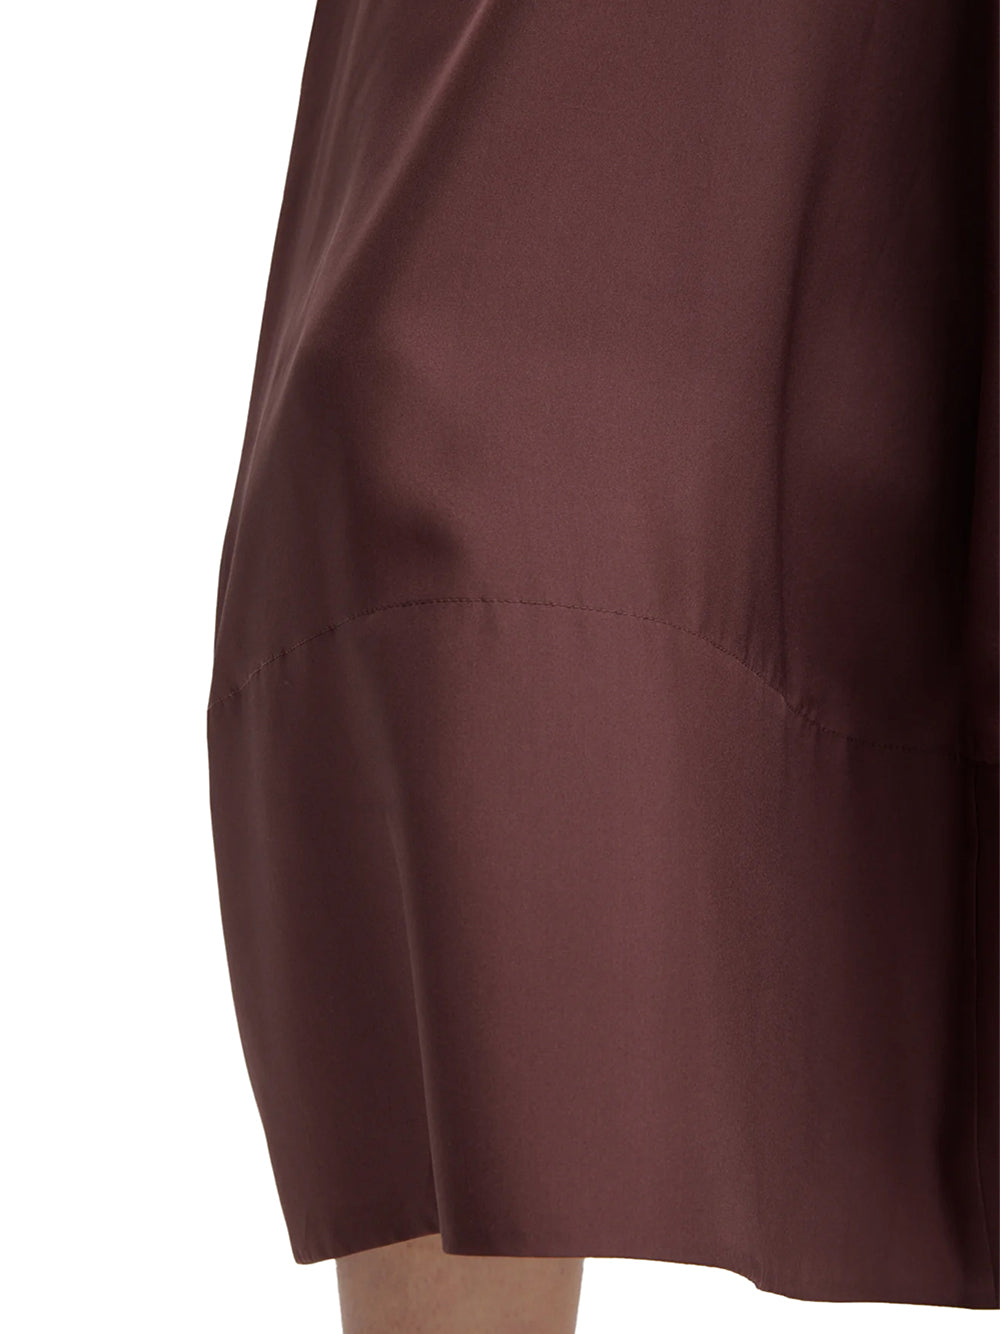 Midi silk circular seamed skirt